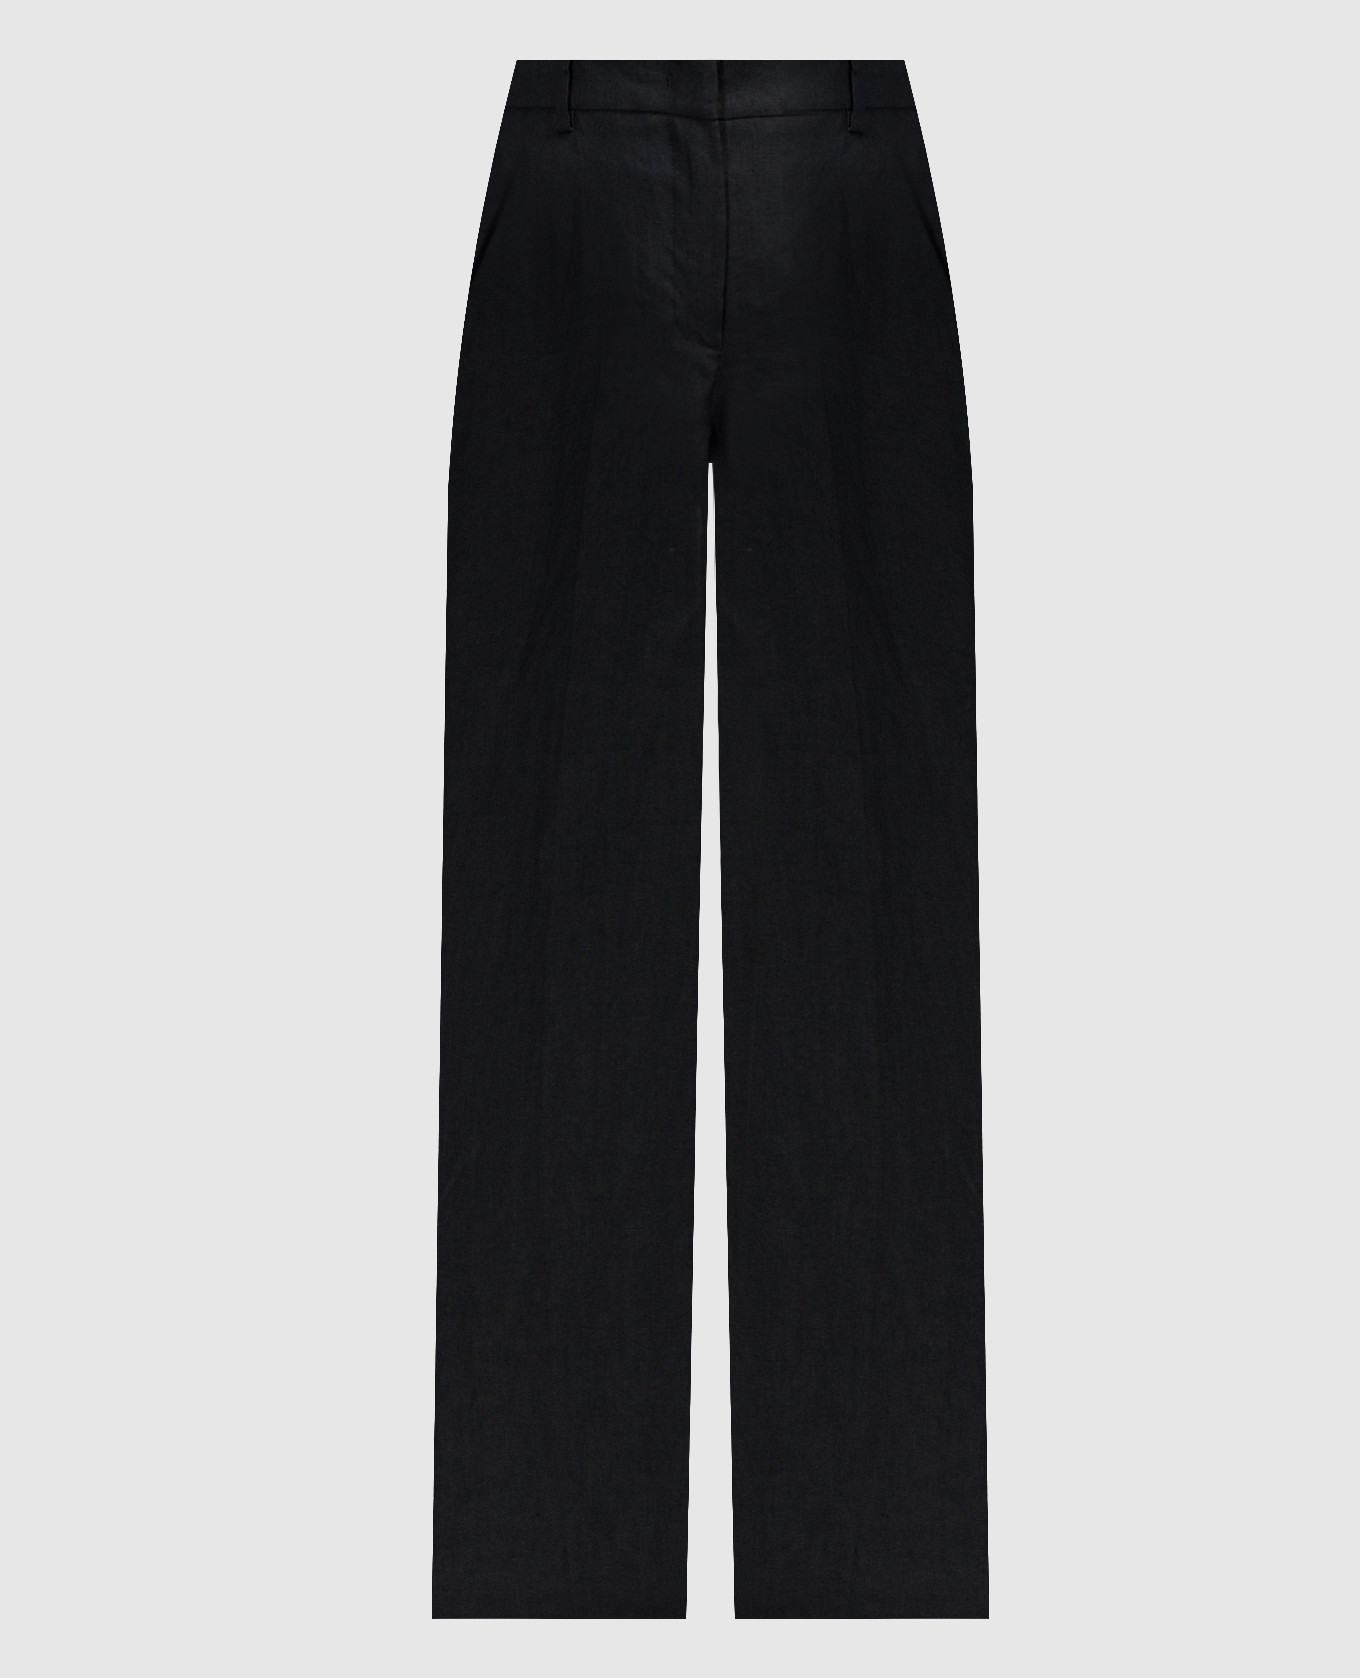 Black pants MALIZIA made of linen